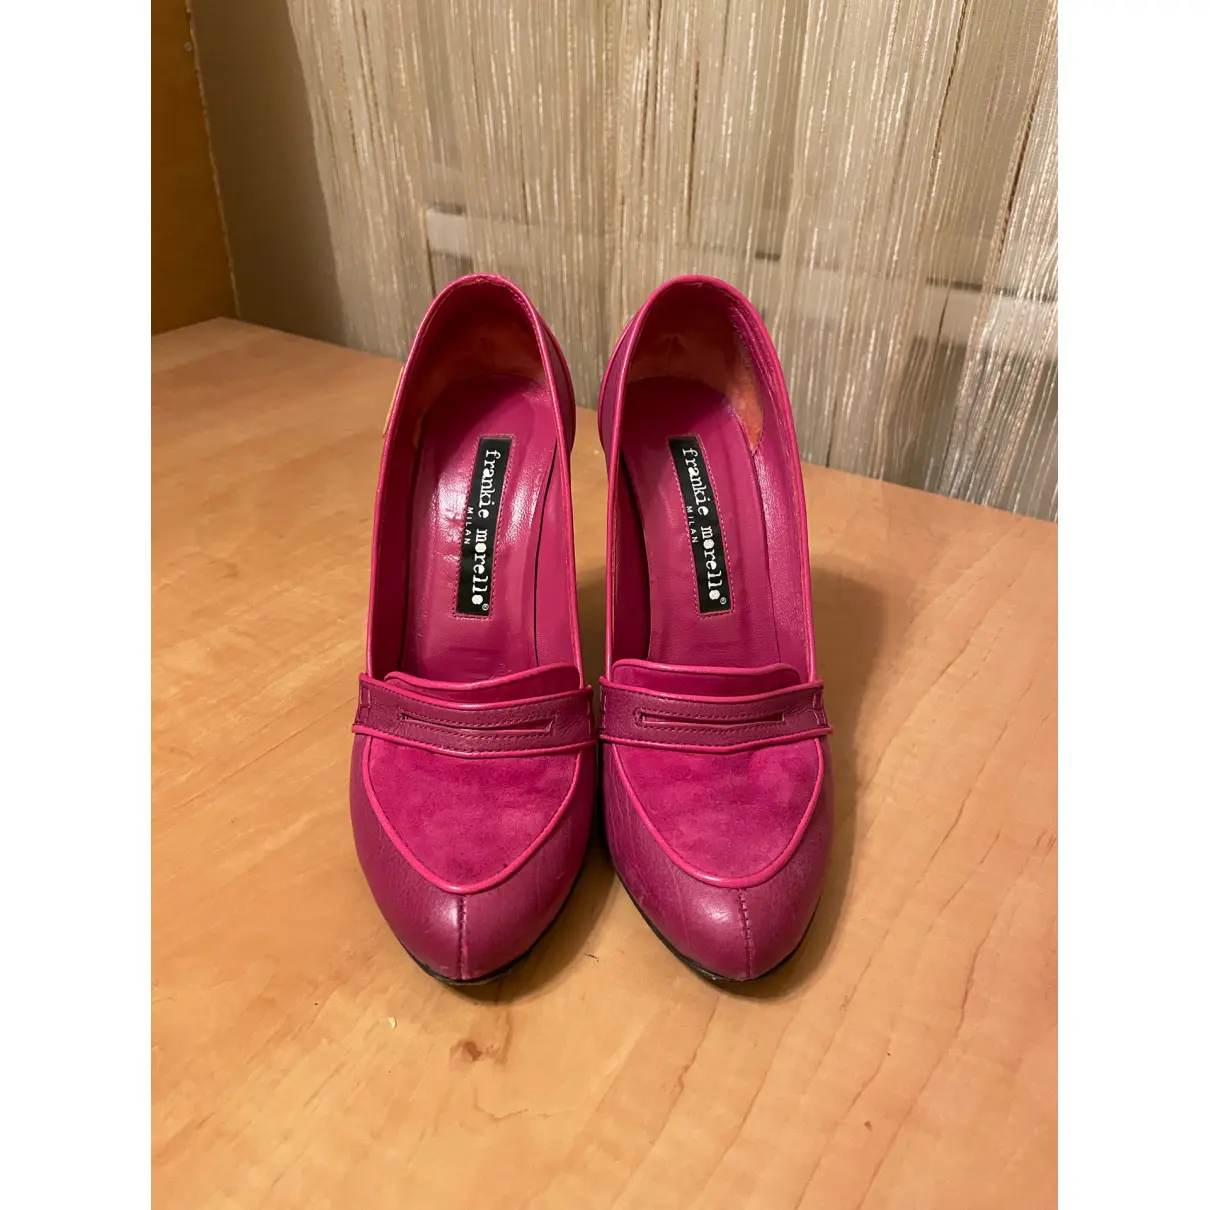 Buy Frankie Morello Leather heels online